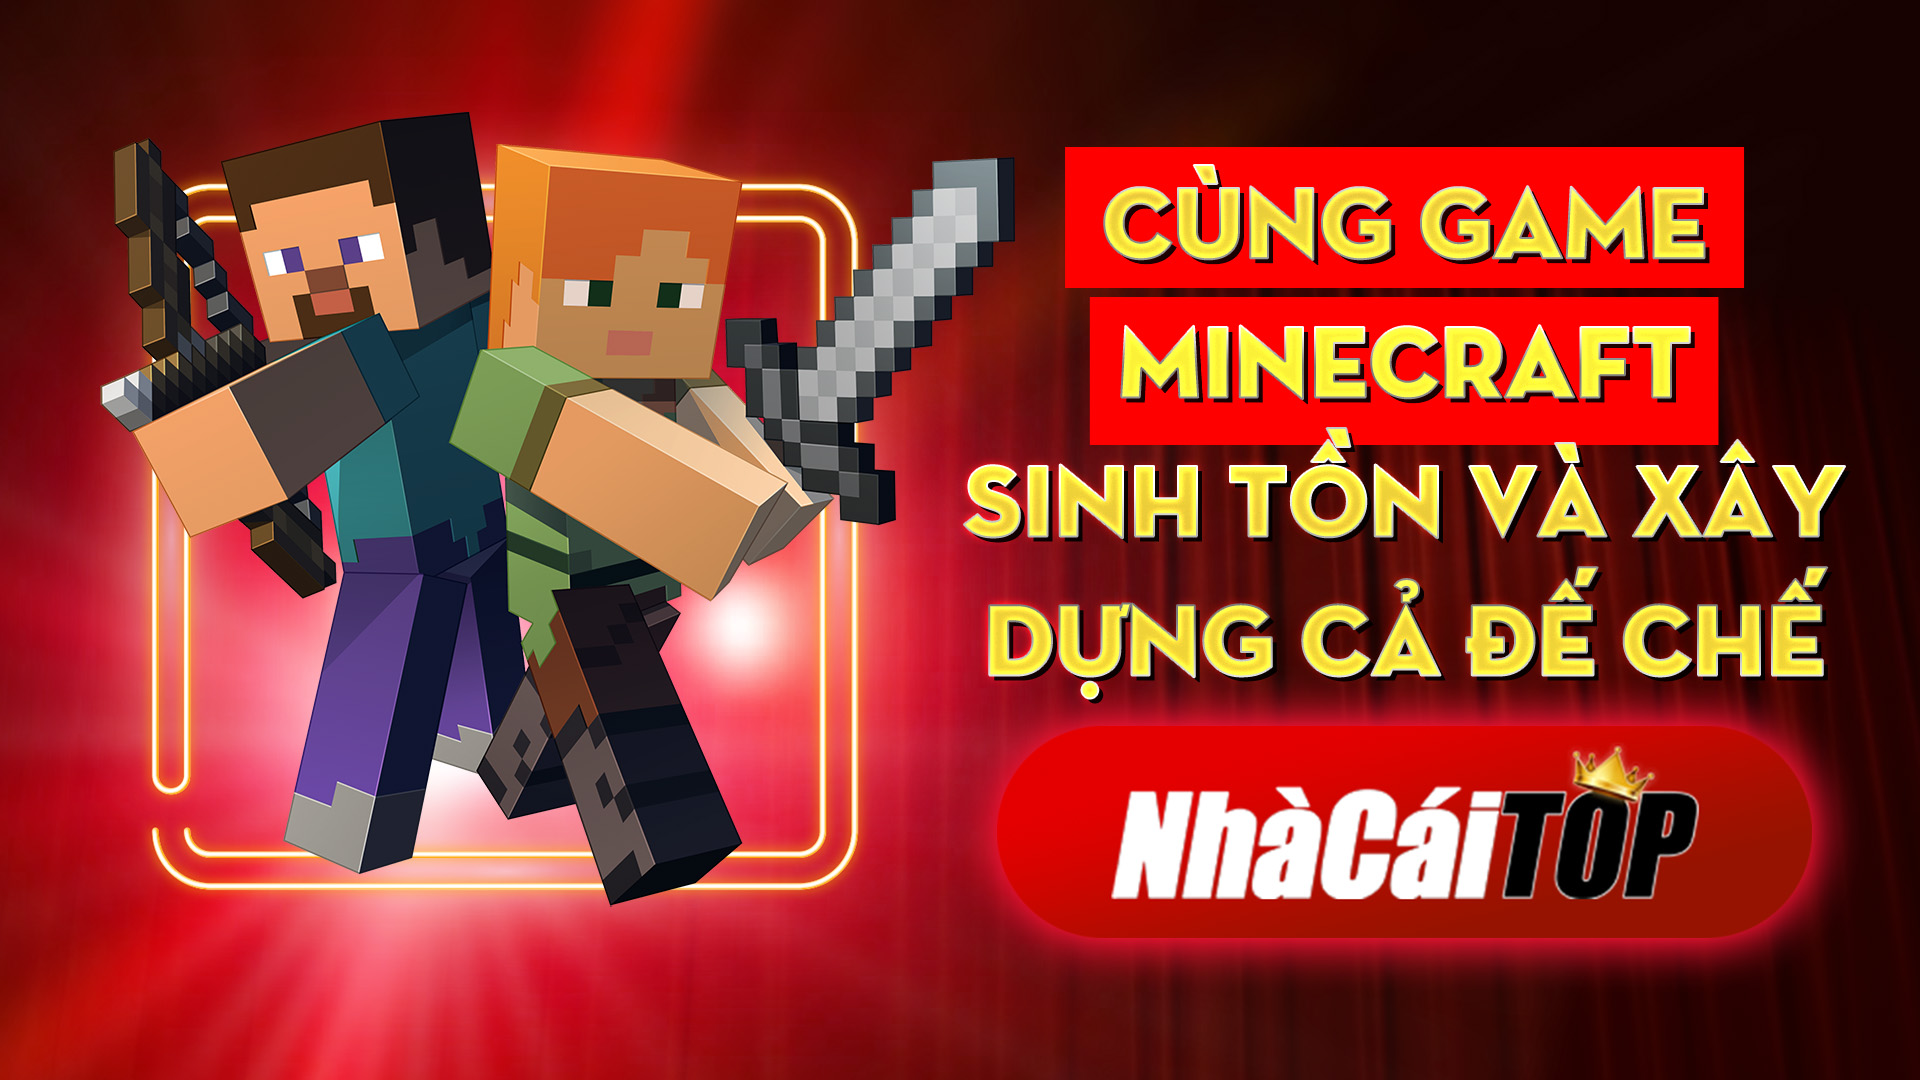 334 Cung Game Minecraft Sinh Ton Va Xay Dung Ca Dje Che